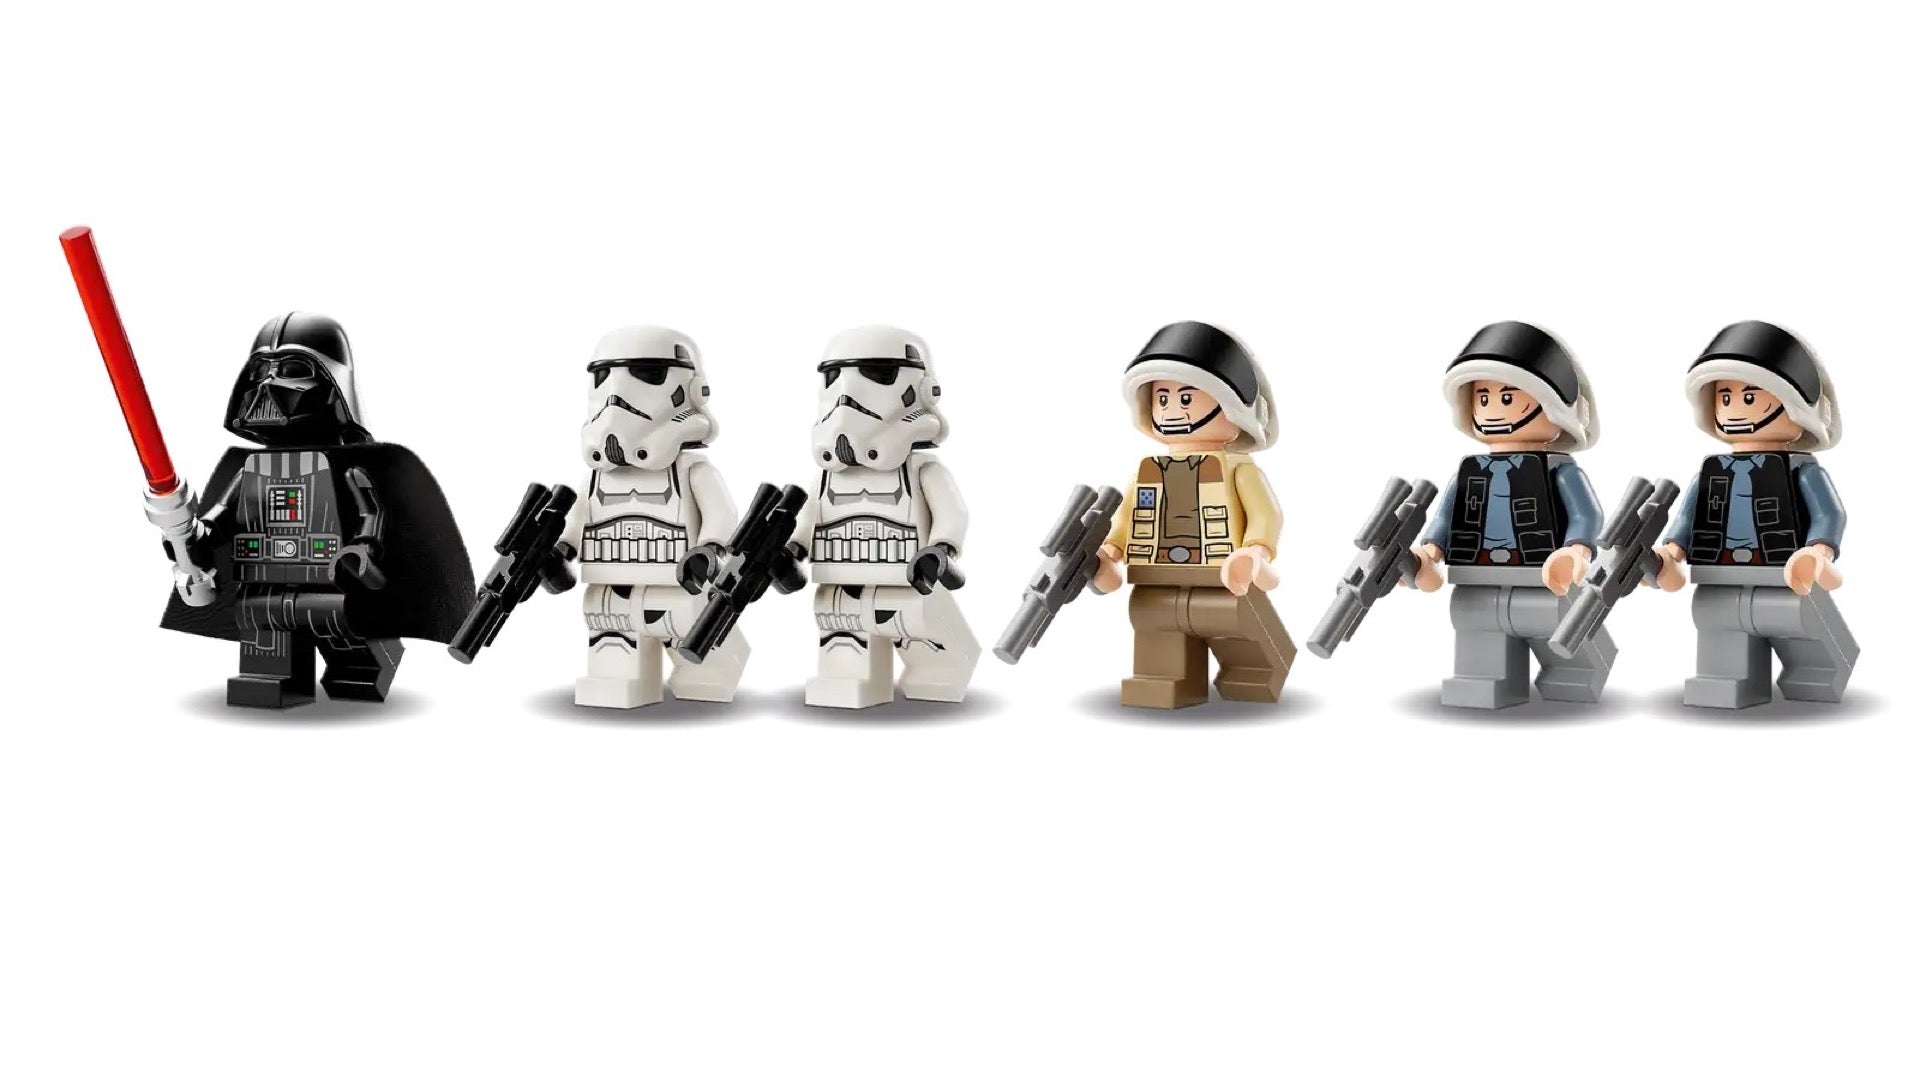 75387 LEGO Star Wars Imbarco sulla Tantive IV